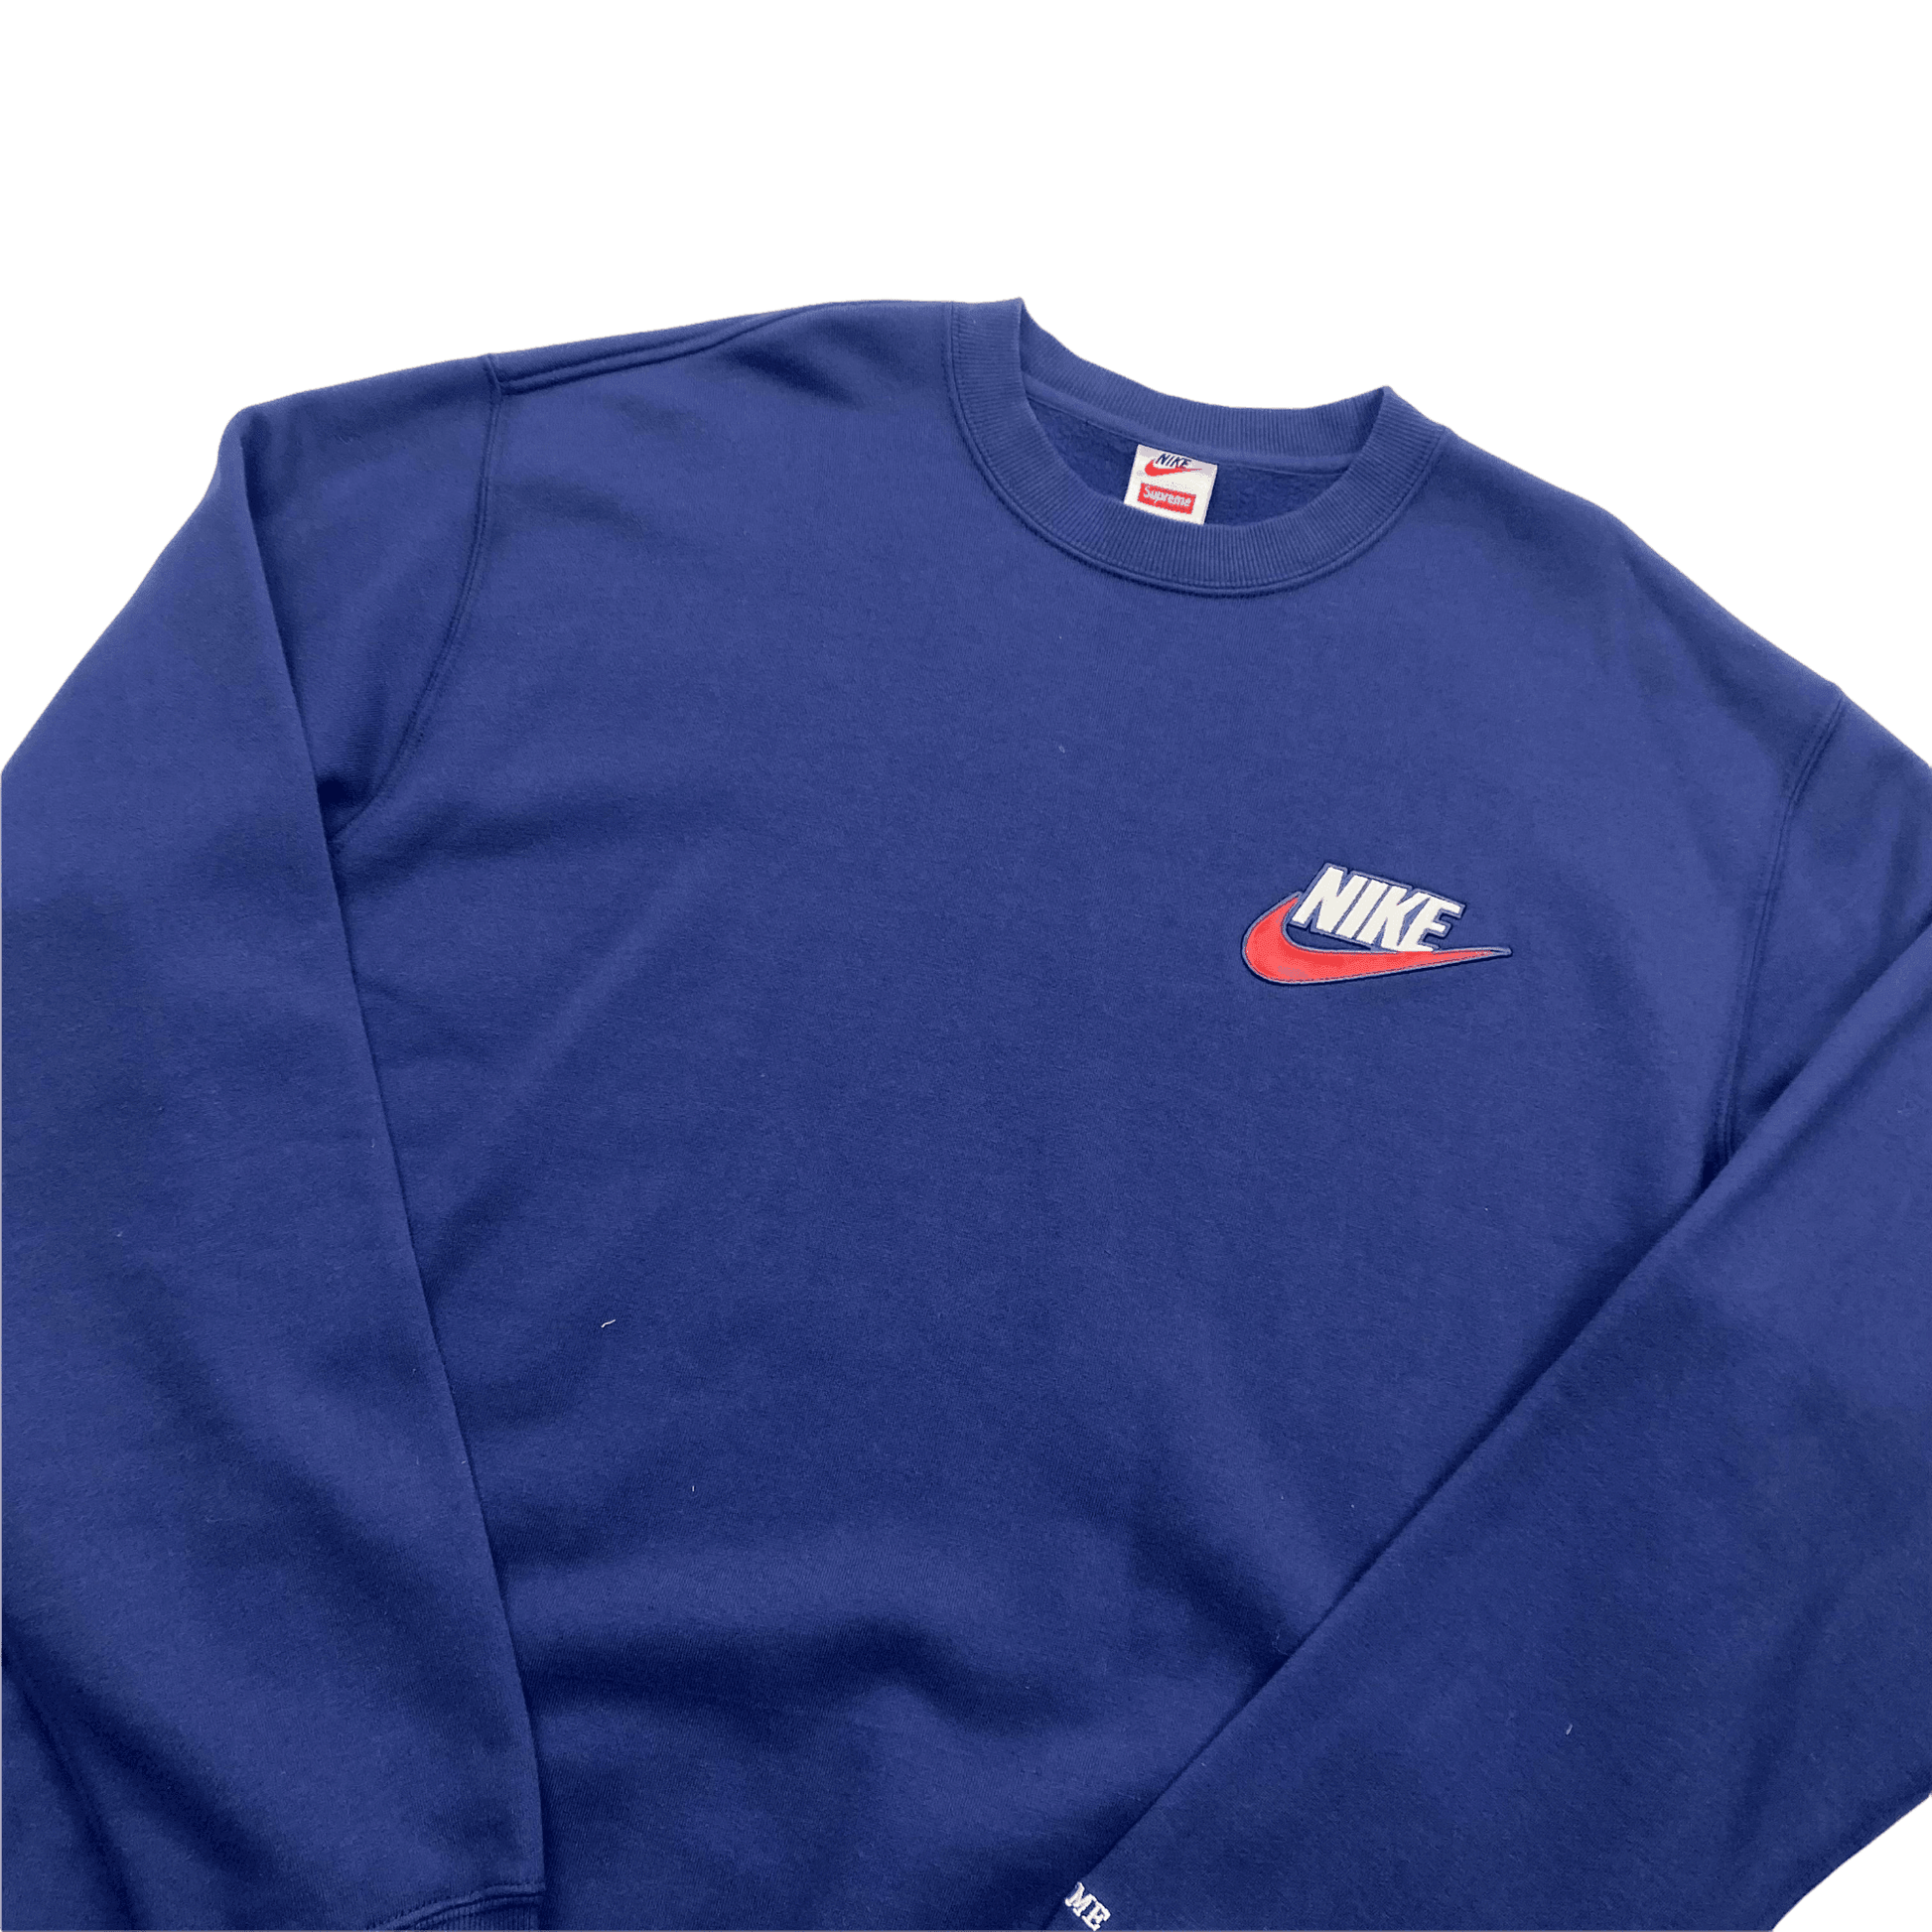 Navy Blue Nike x Supreme Sweatshirt - Extra Large - The Streetwear Studio